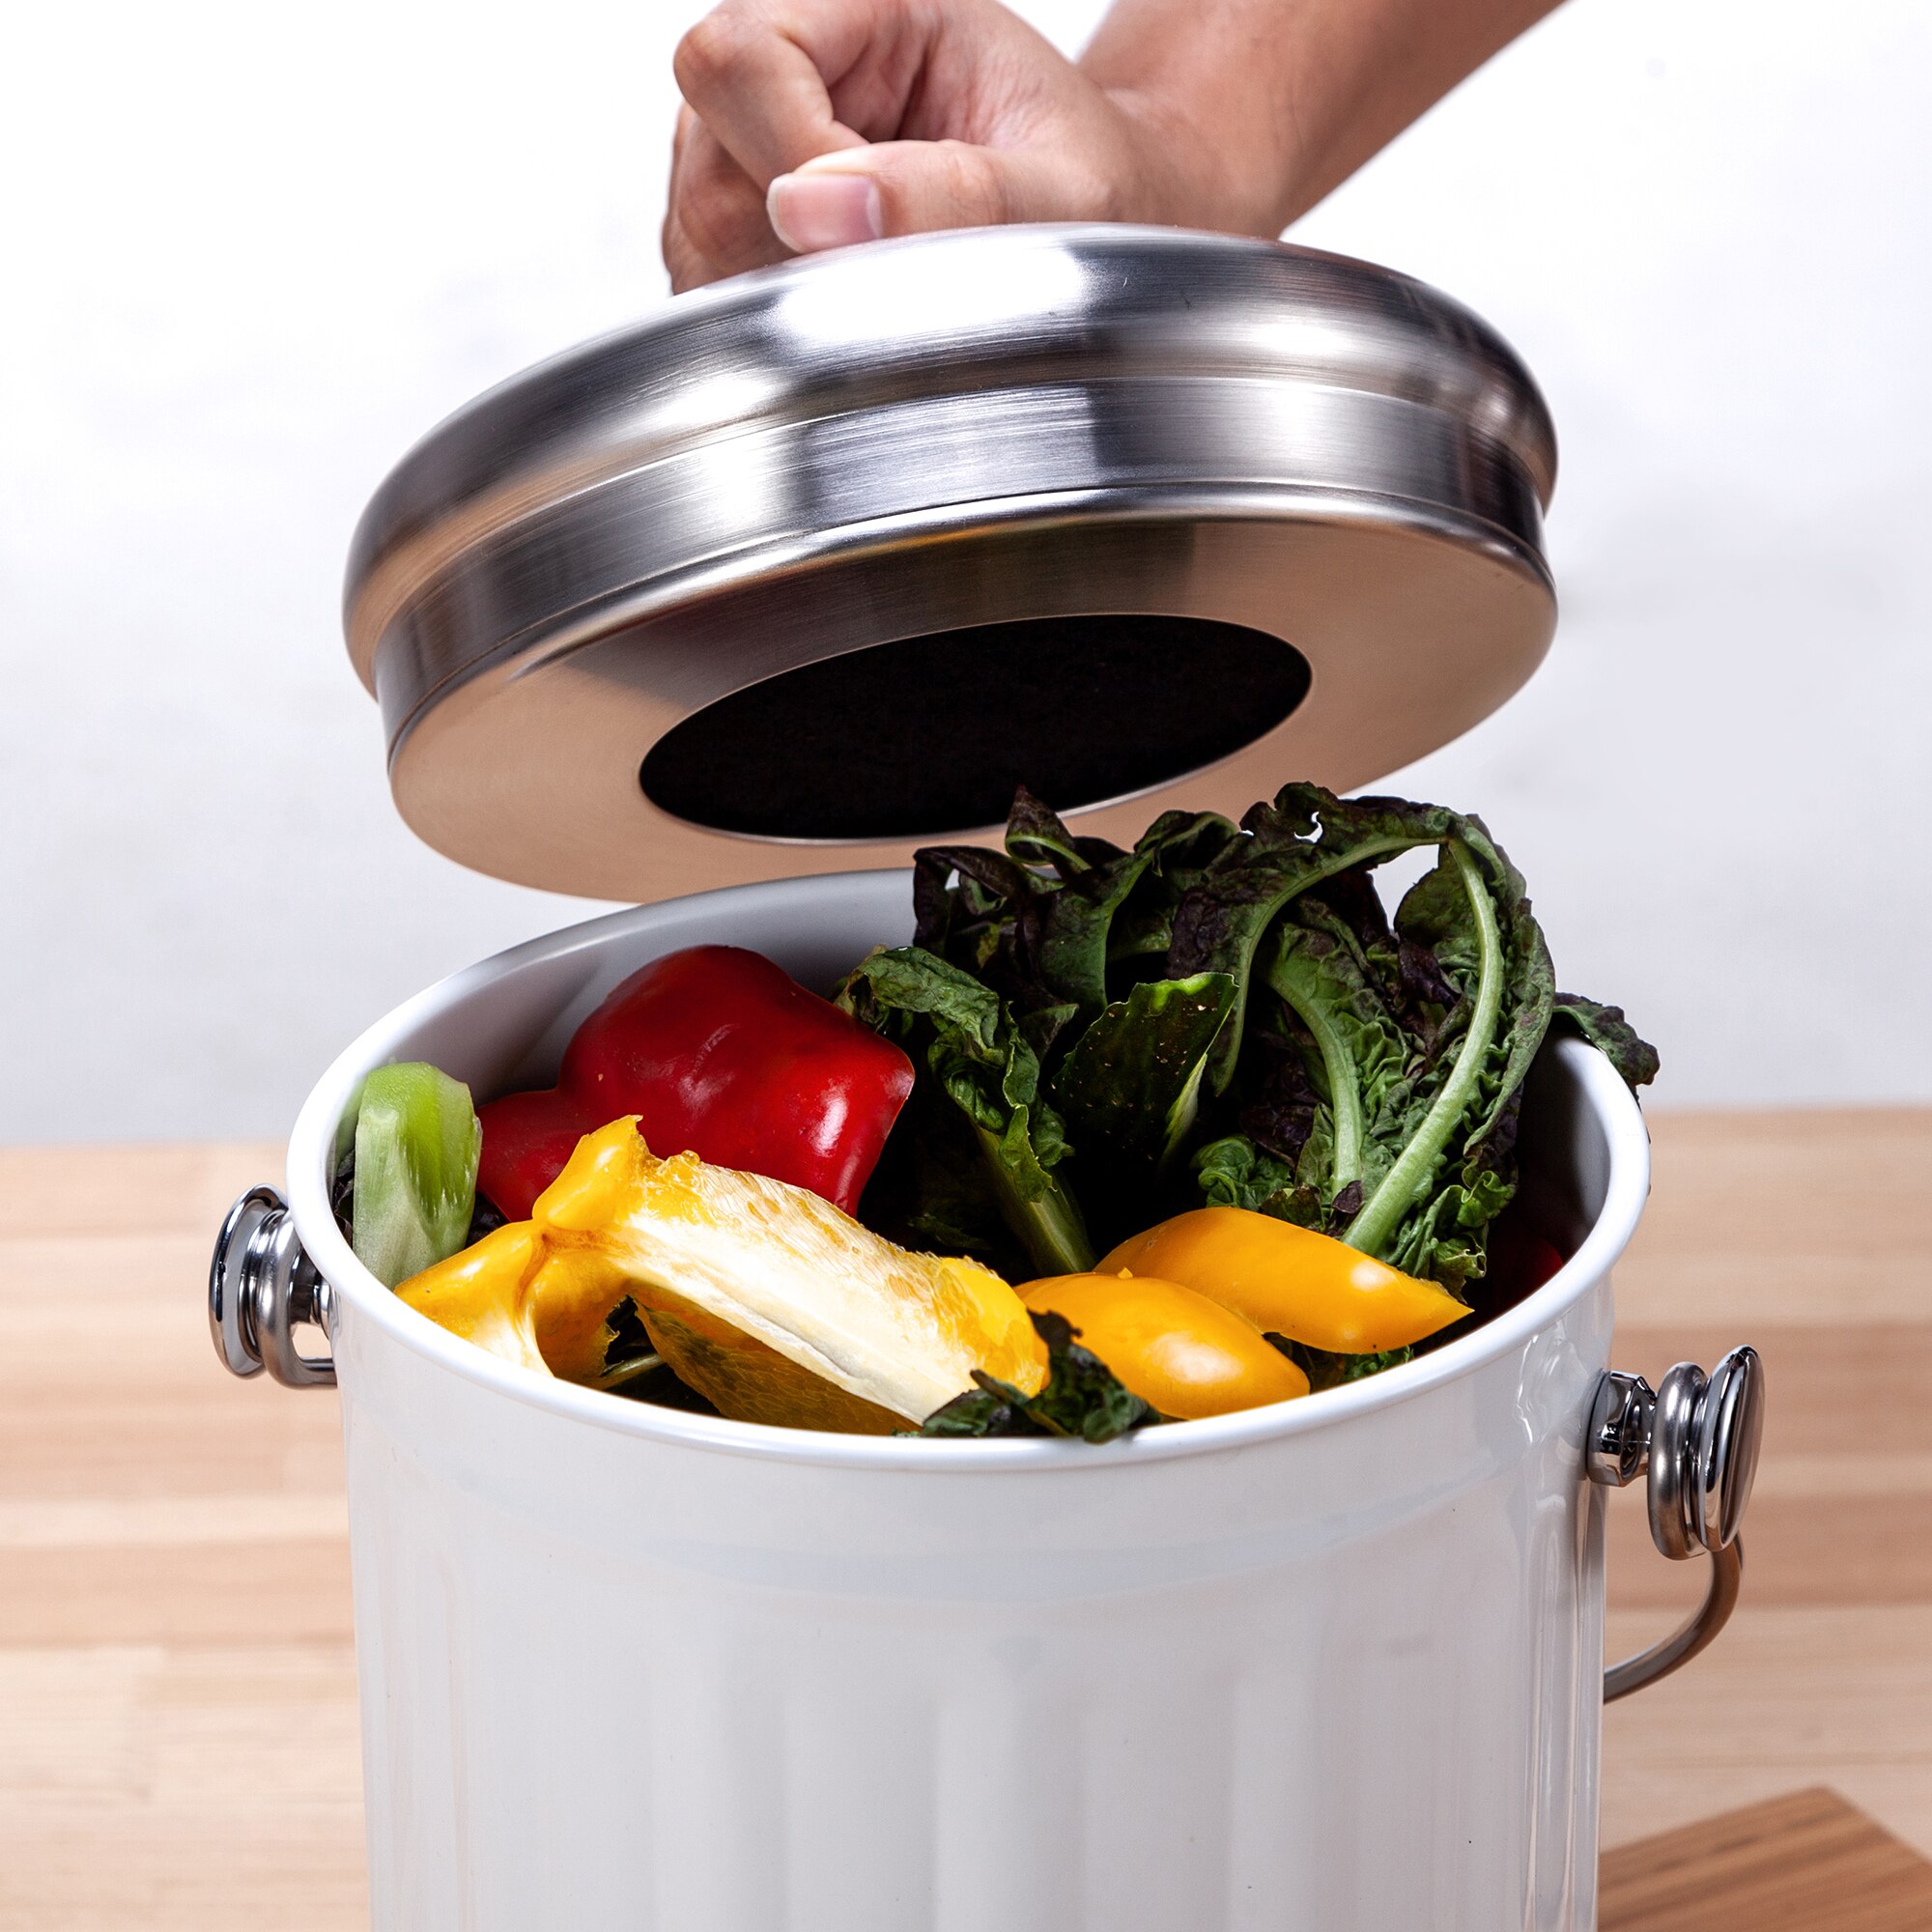 Premium Seau Compost Inodore en Acier Inoxydable pour Cuisine